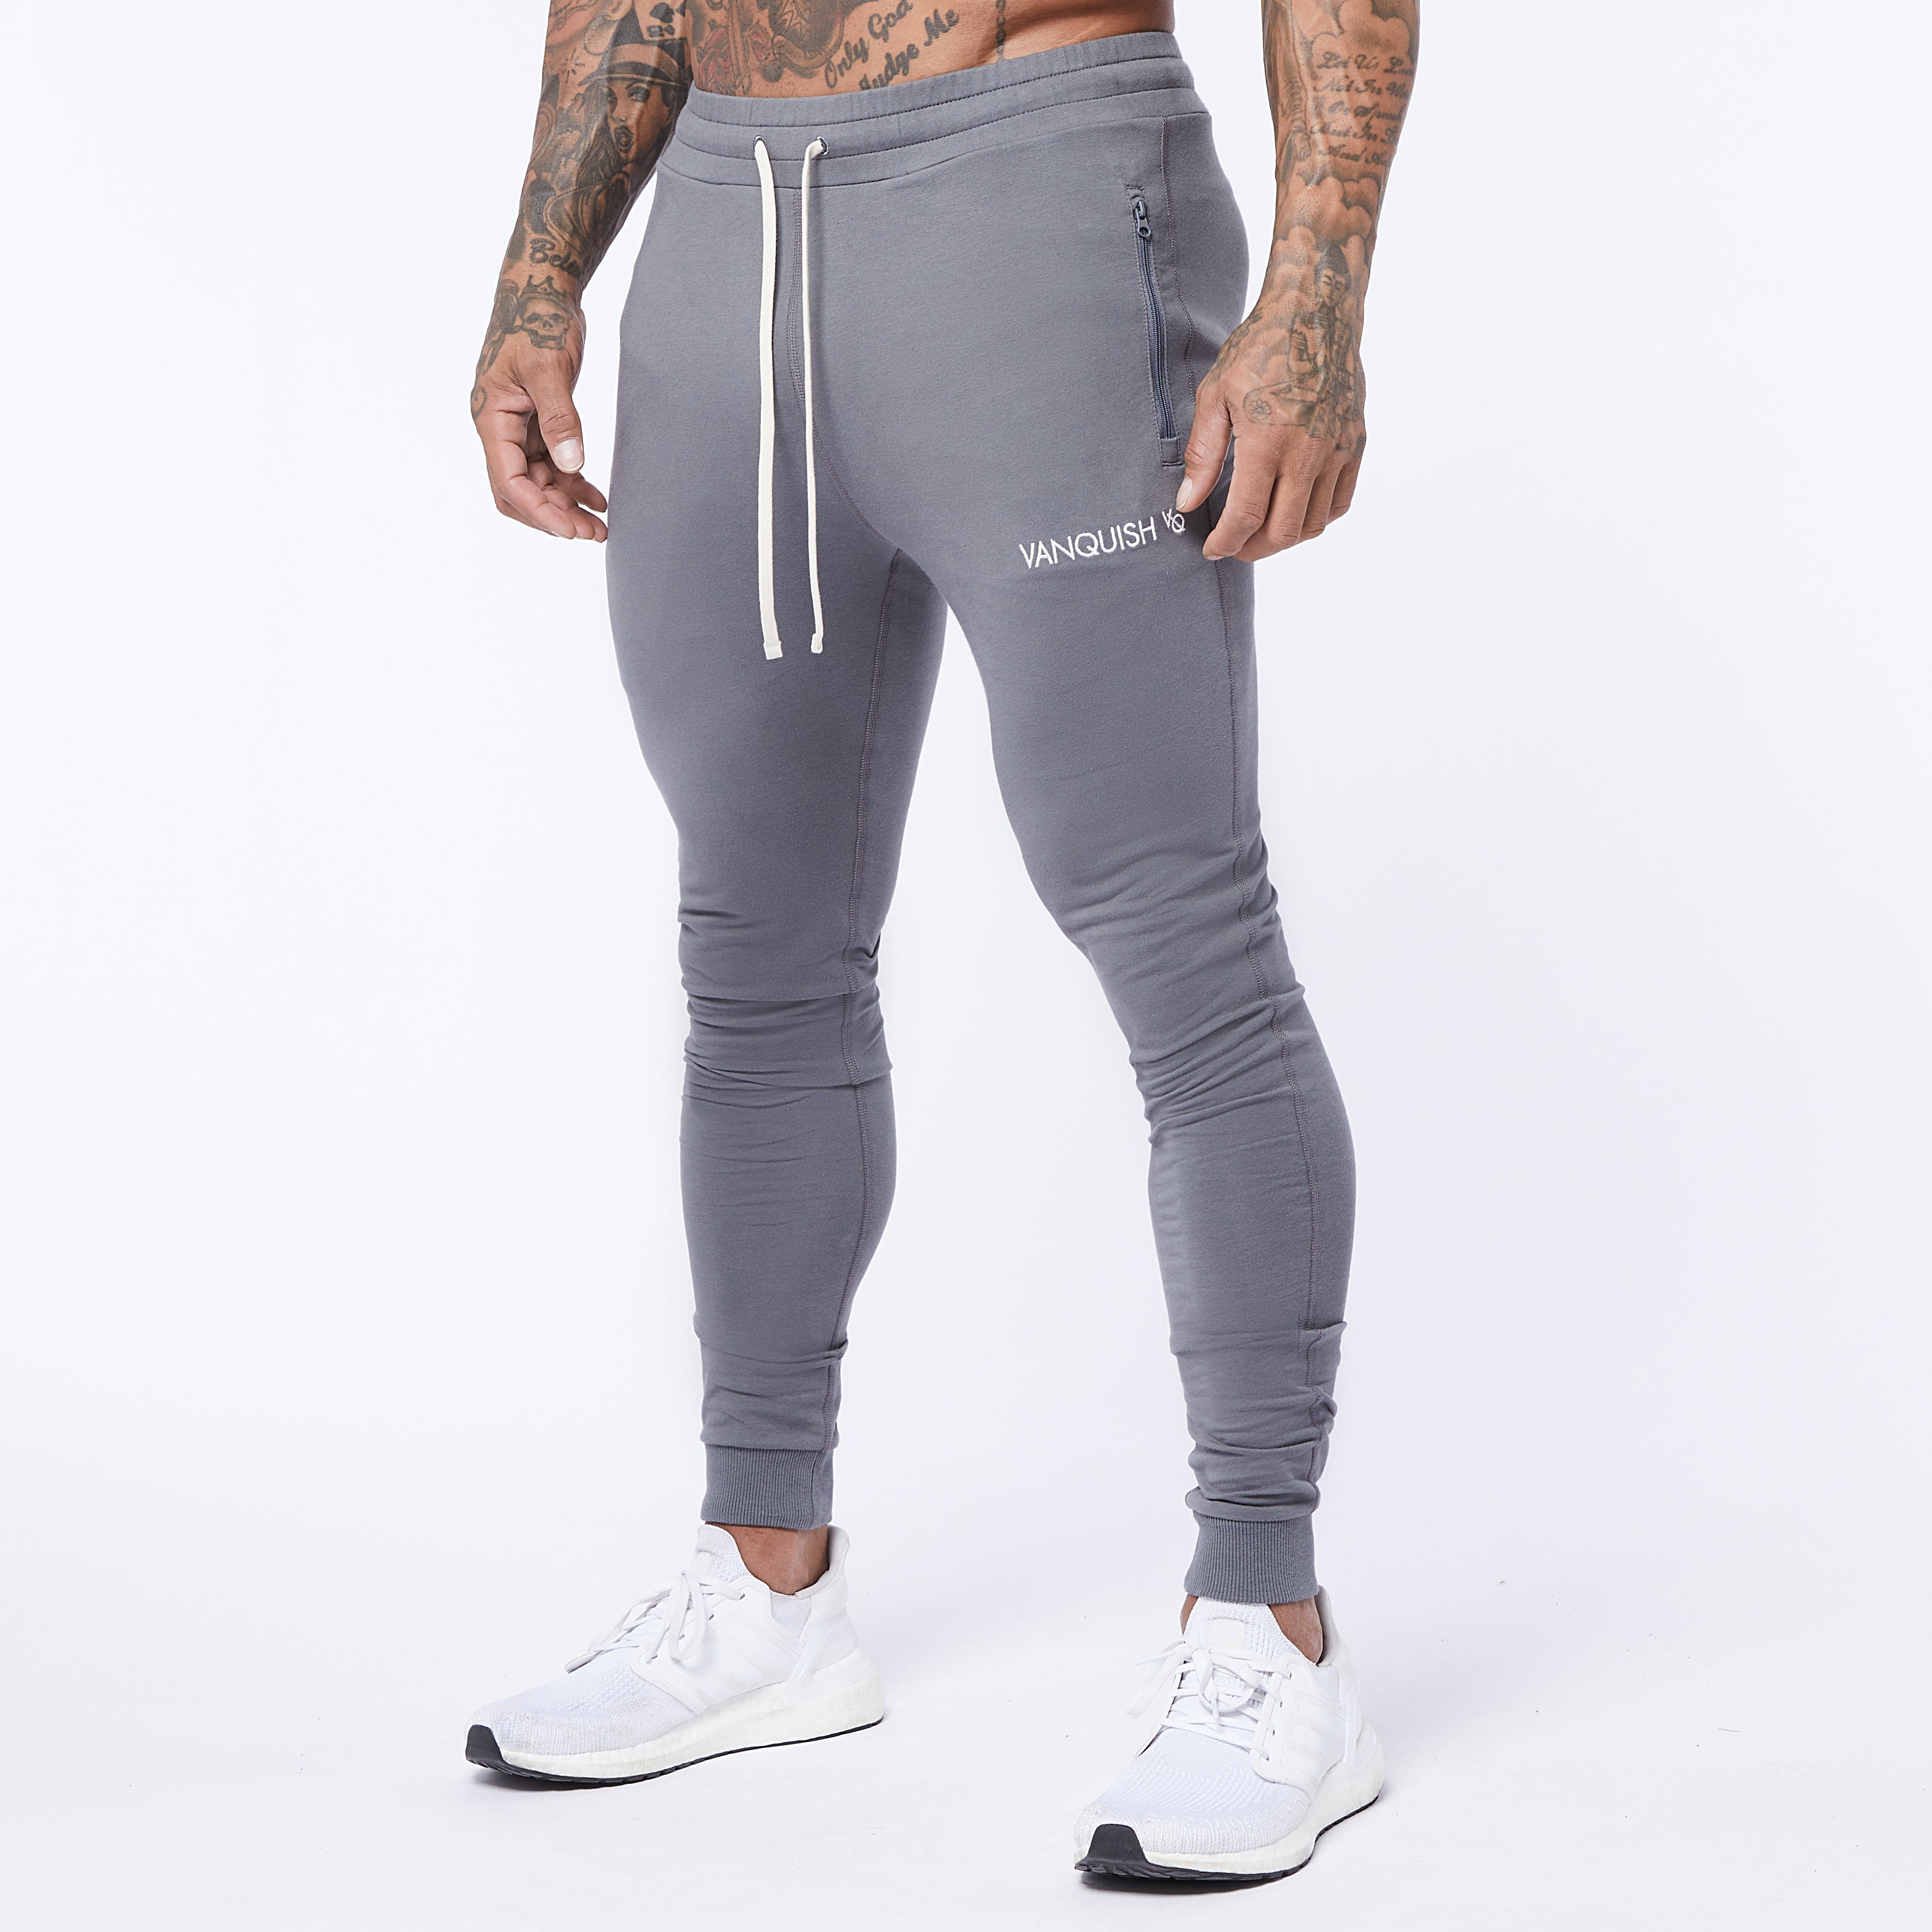 Vanquish Core Grey Tapered Sweatpants